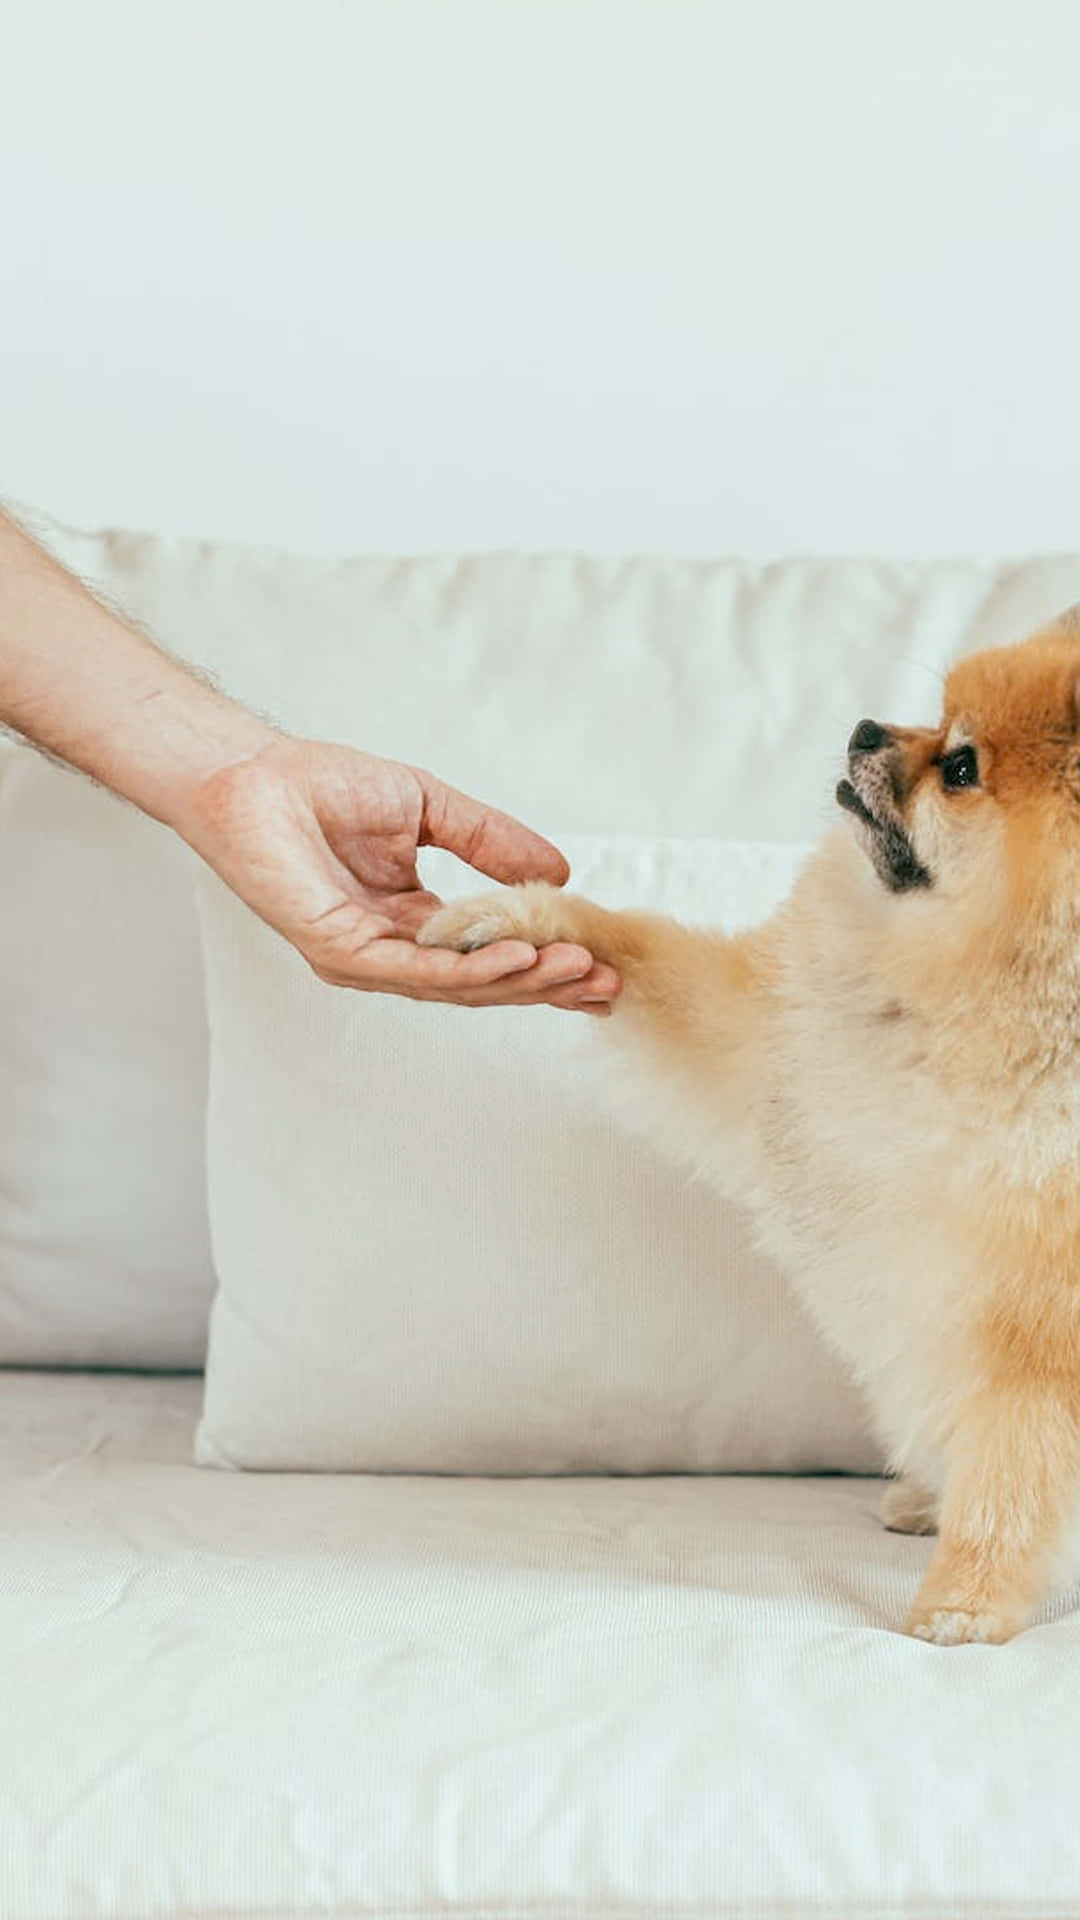 Handshake With Dog Wallpaper